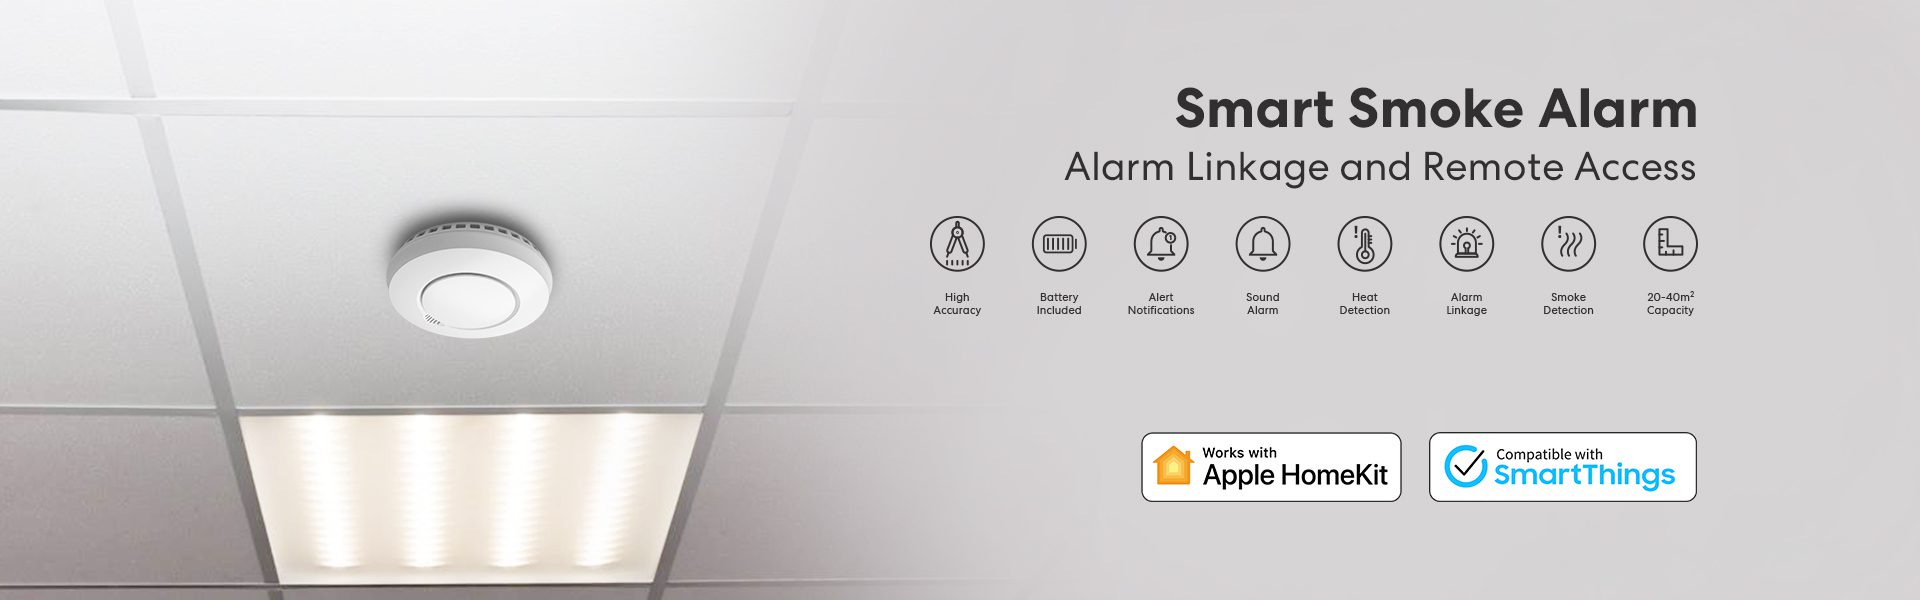 1644827884027 ef7fe6ac Meross Smart Smoke Alarm Kit, GS559AHHK